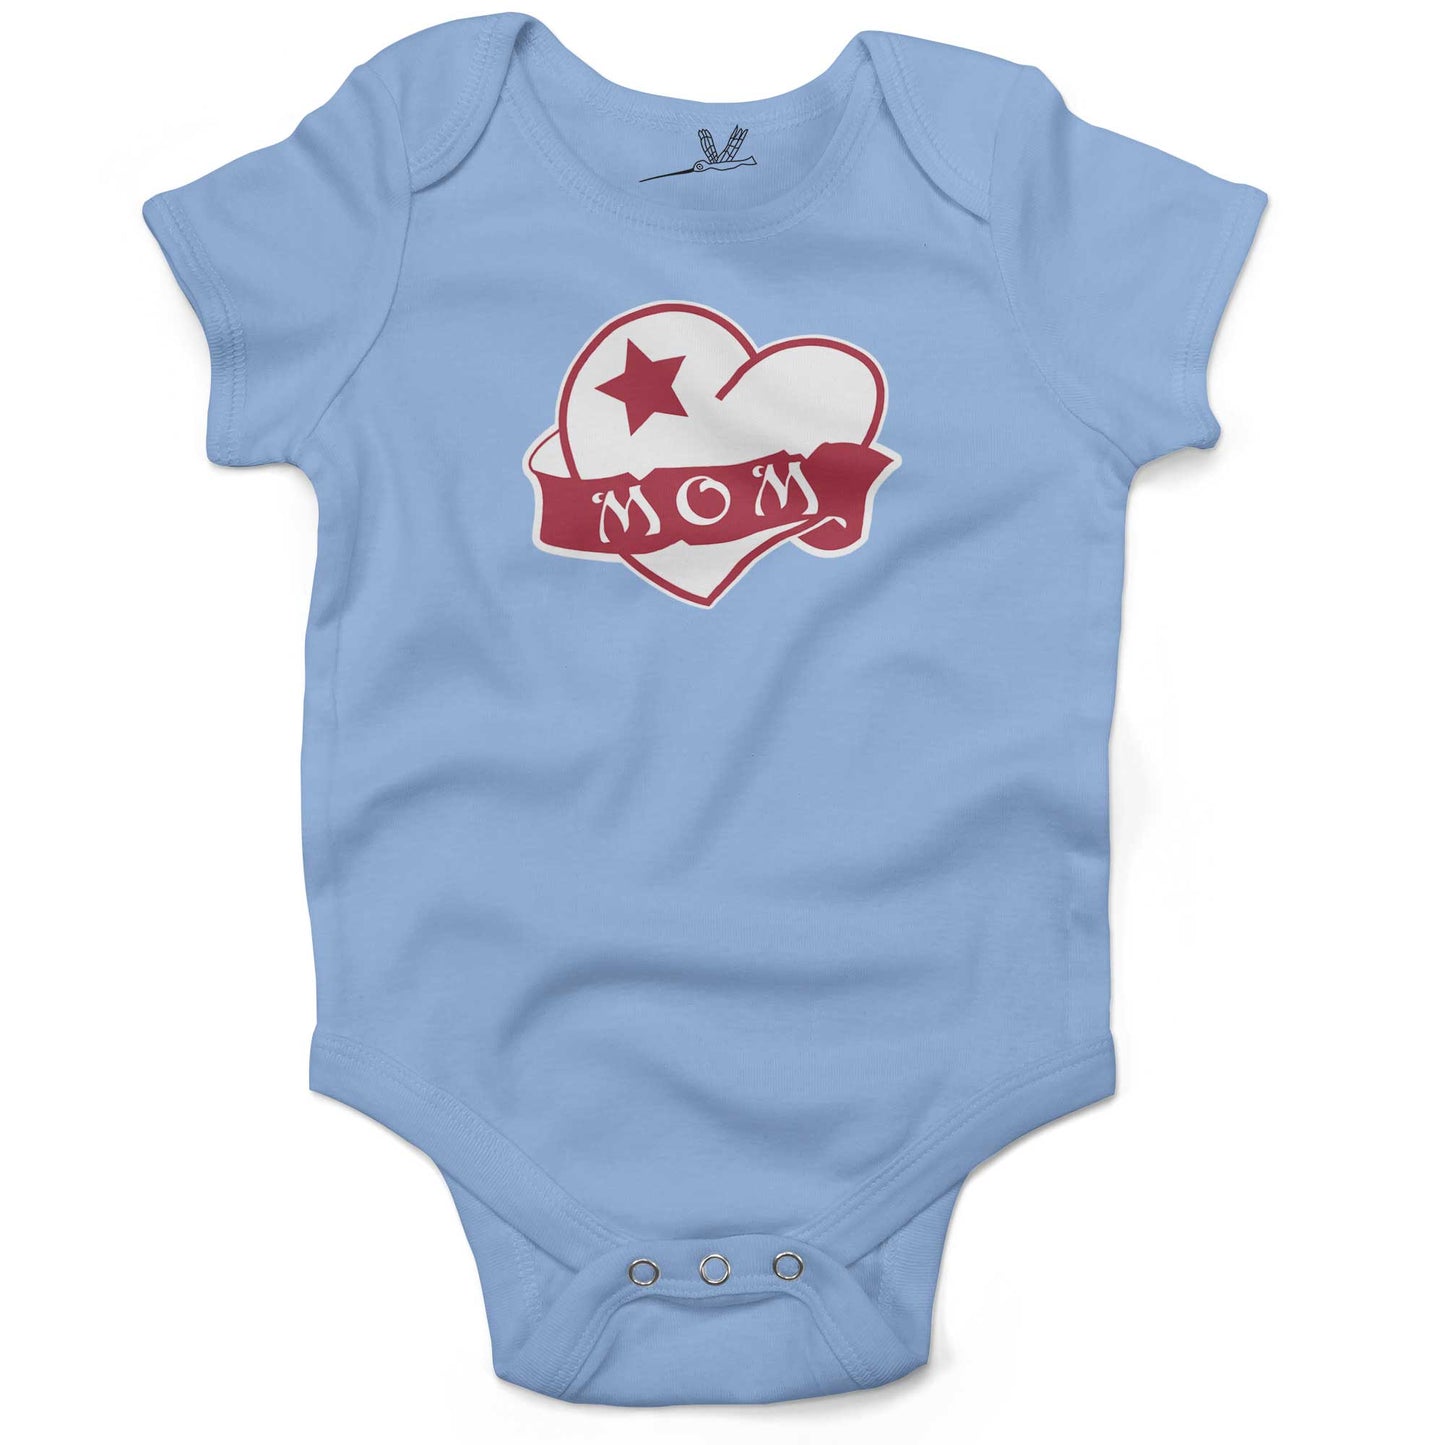 Mom Tattoo Heart Infant Bodysuit or Raglan Tee-Organic Baby Blue-3-6 months